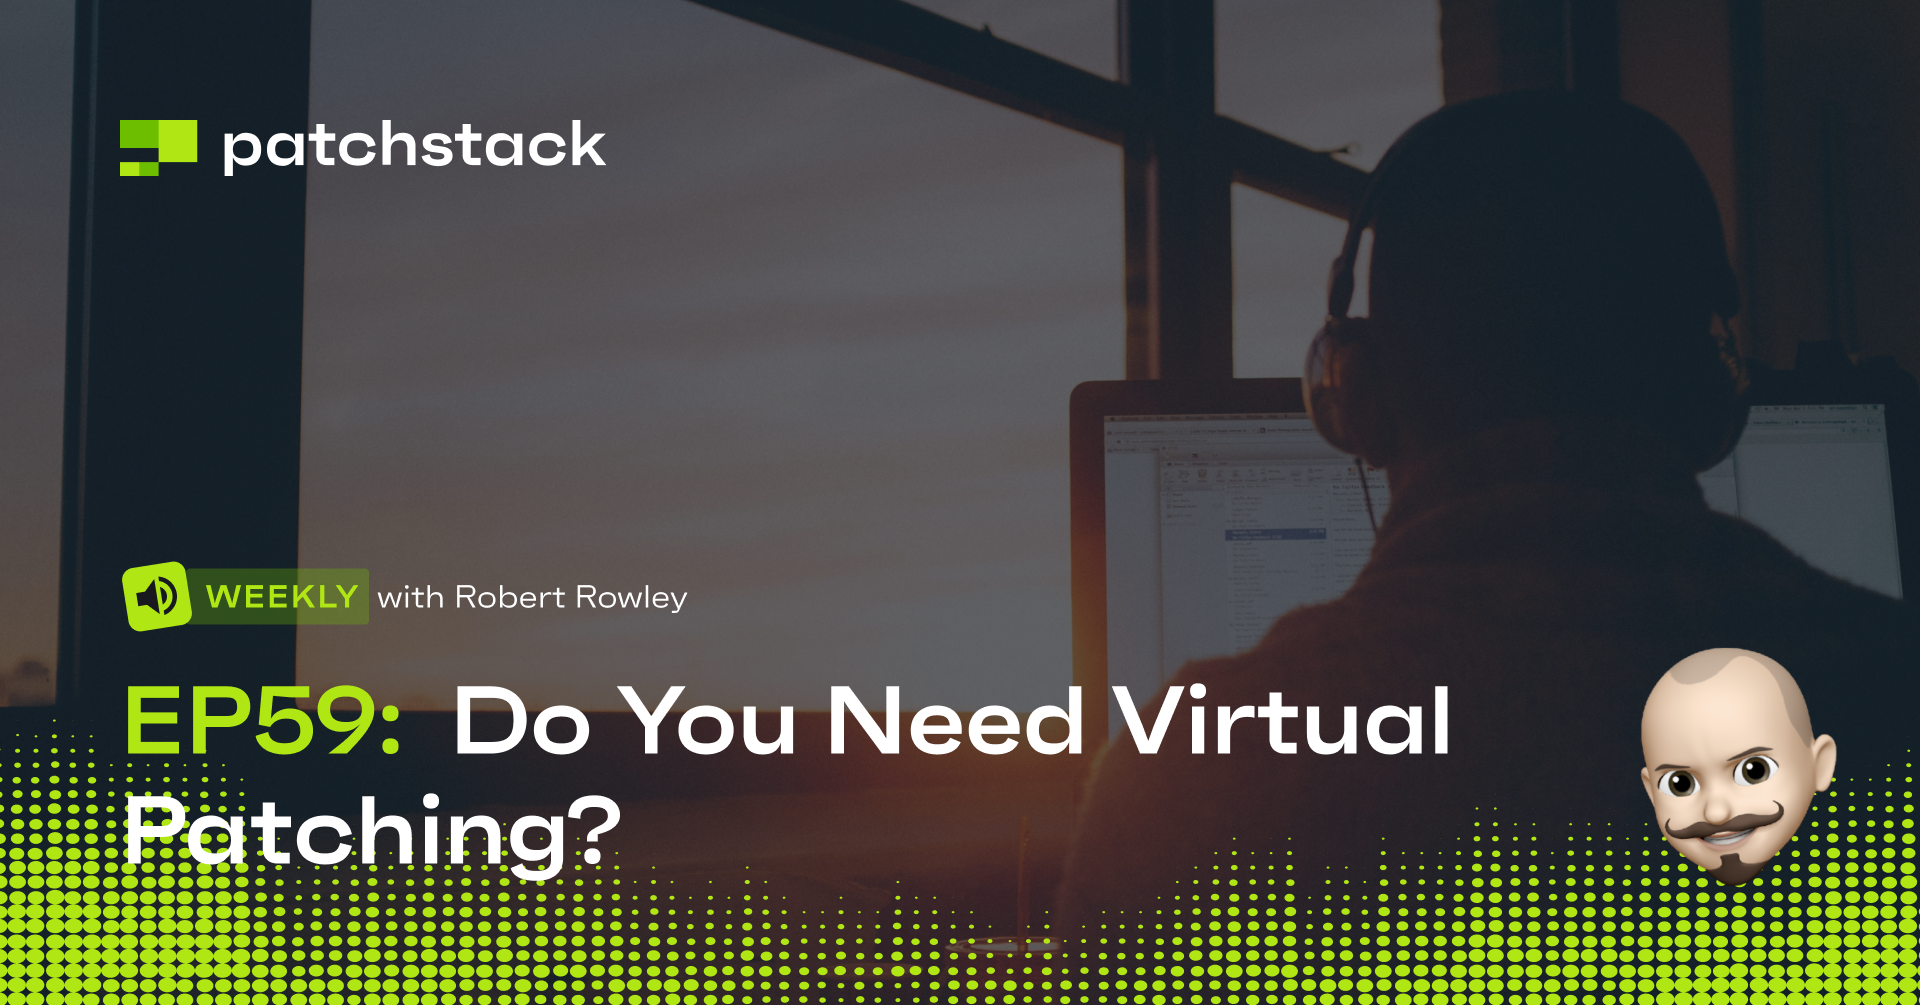 Do you need virtual patching